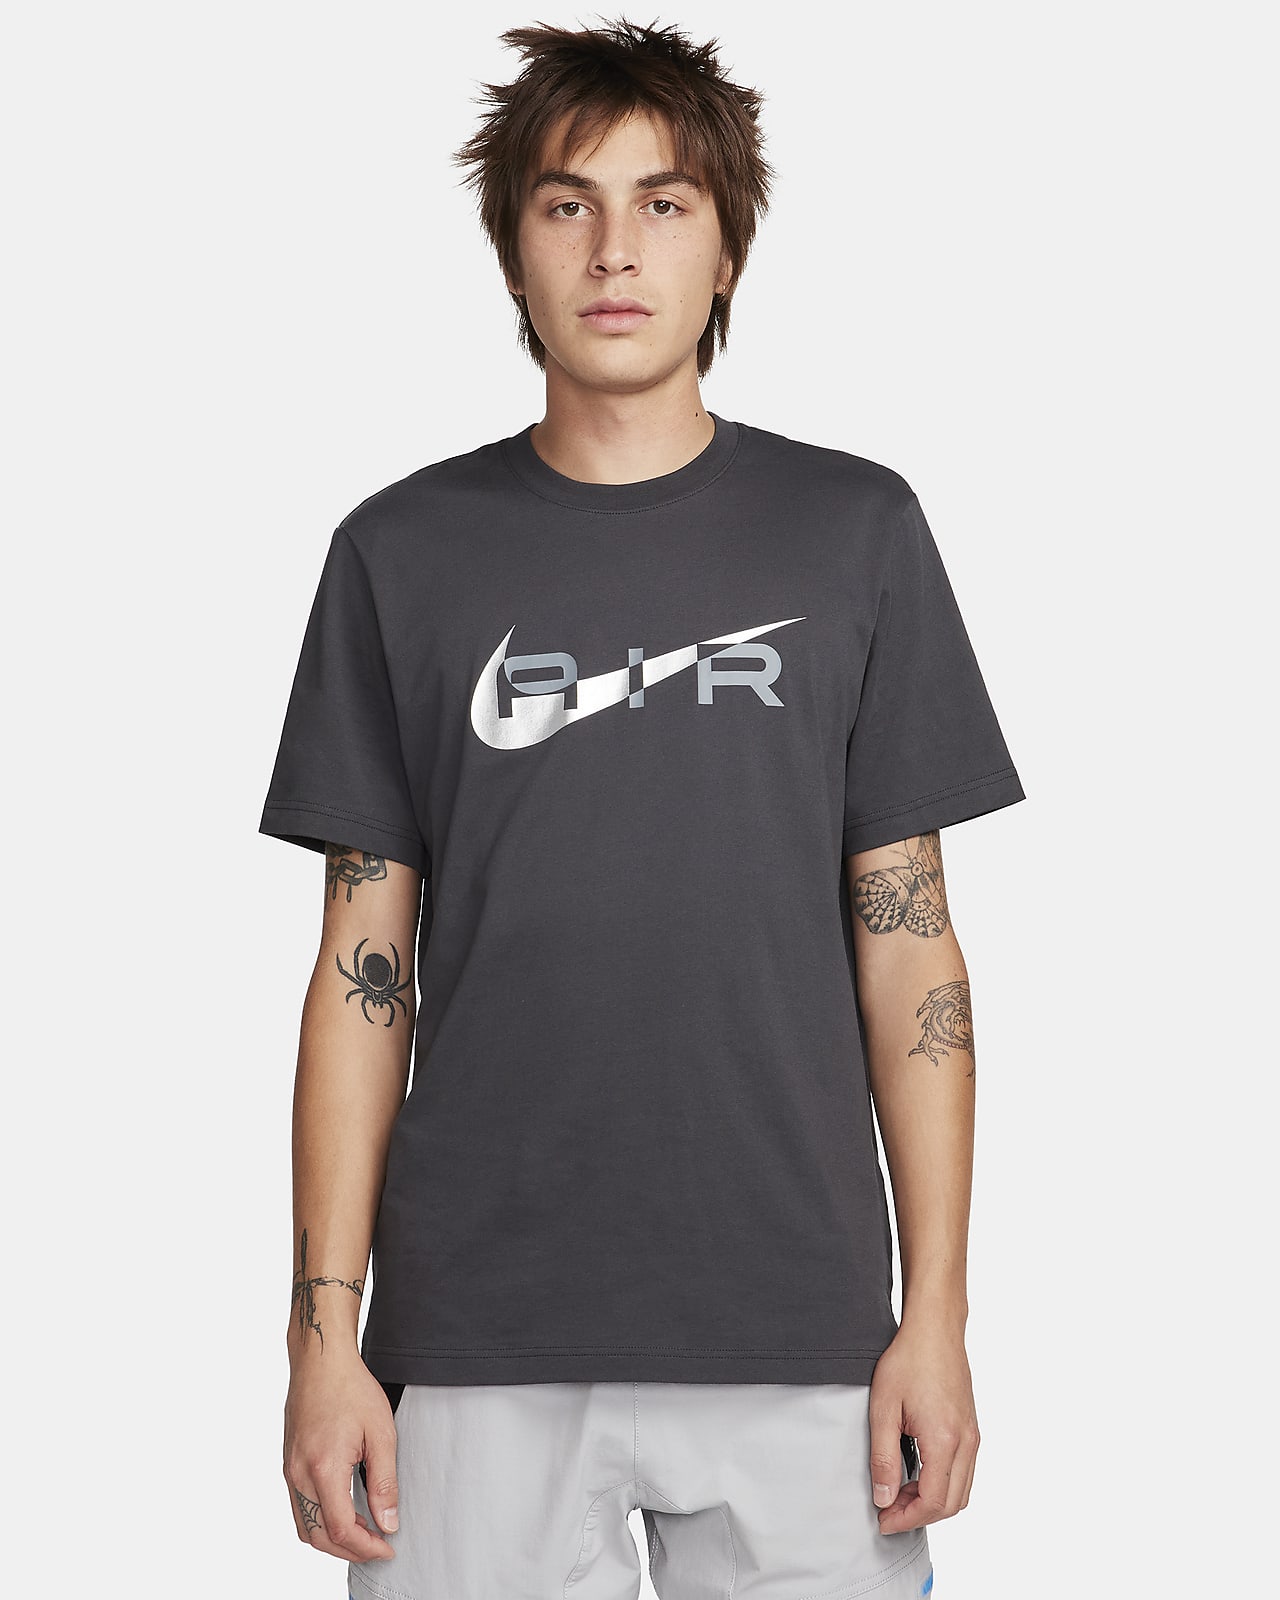 Nike Air Men's Graphic T-Shirt. Nike IL